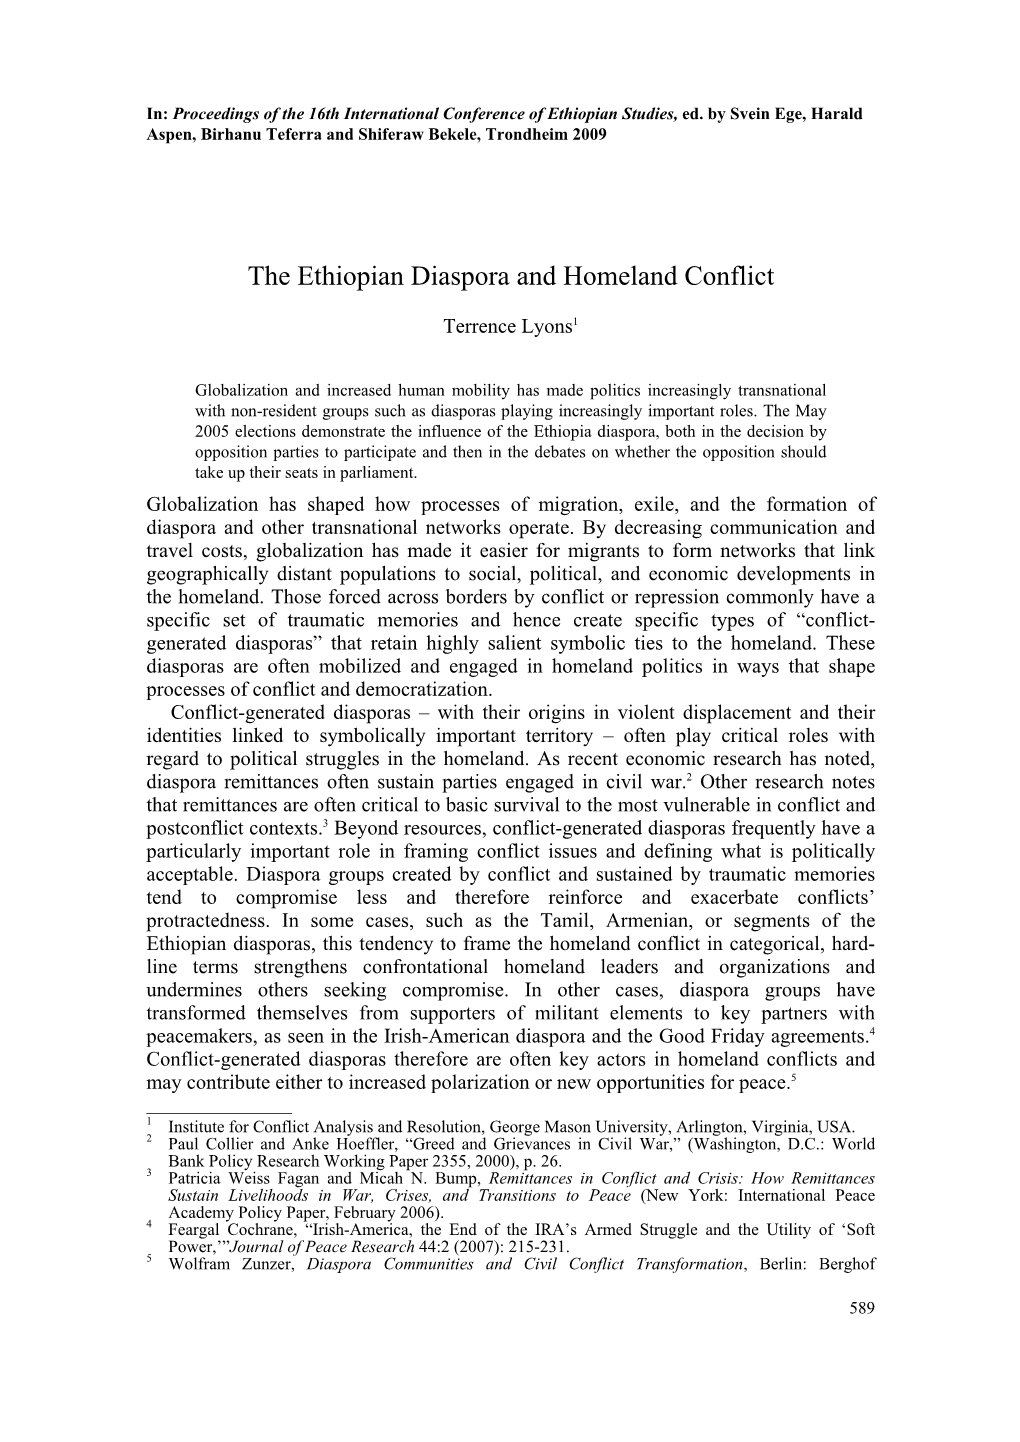 The Ethiopian Diaspora and Homeland Conflict